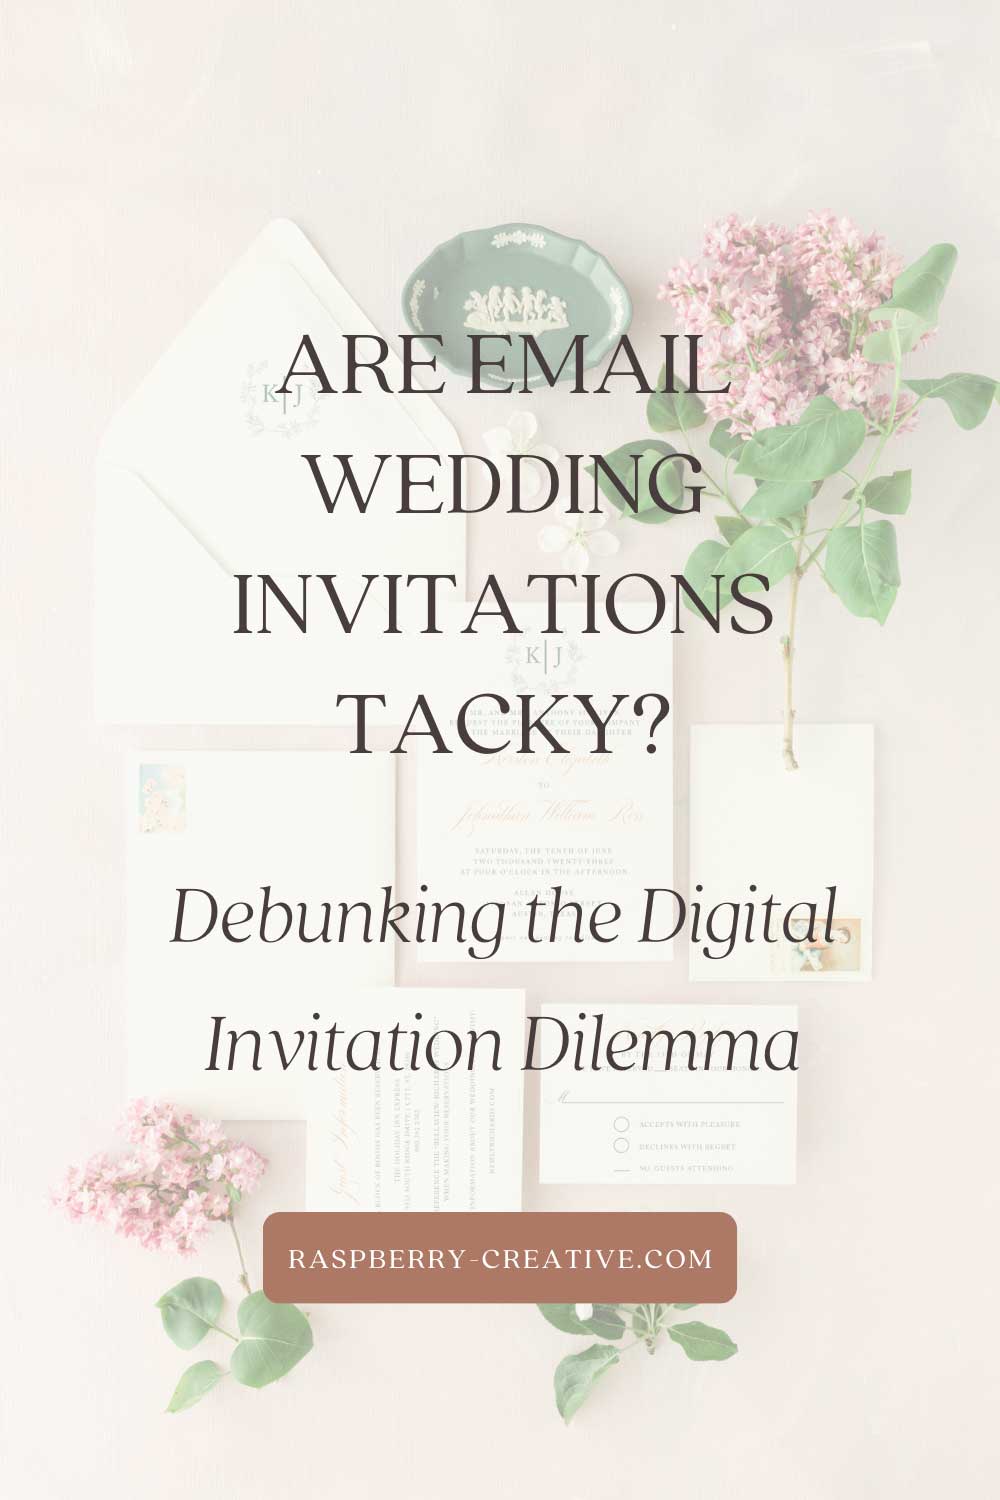 are email wedding invitation tacky-debunking the digital invitation dilemma